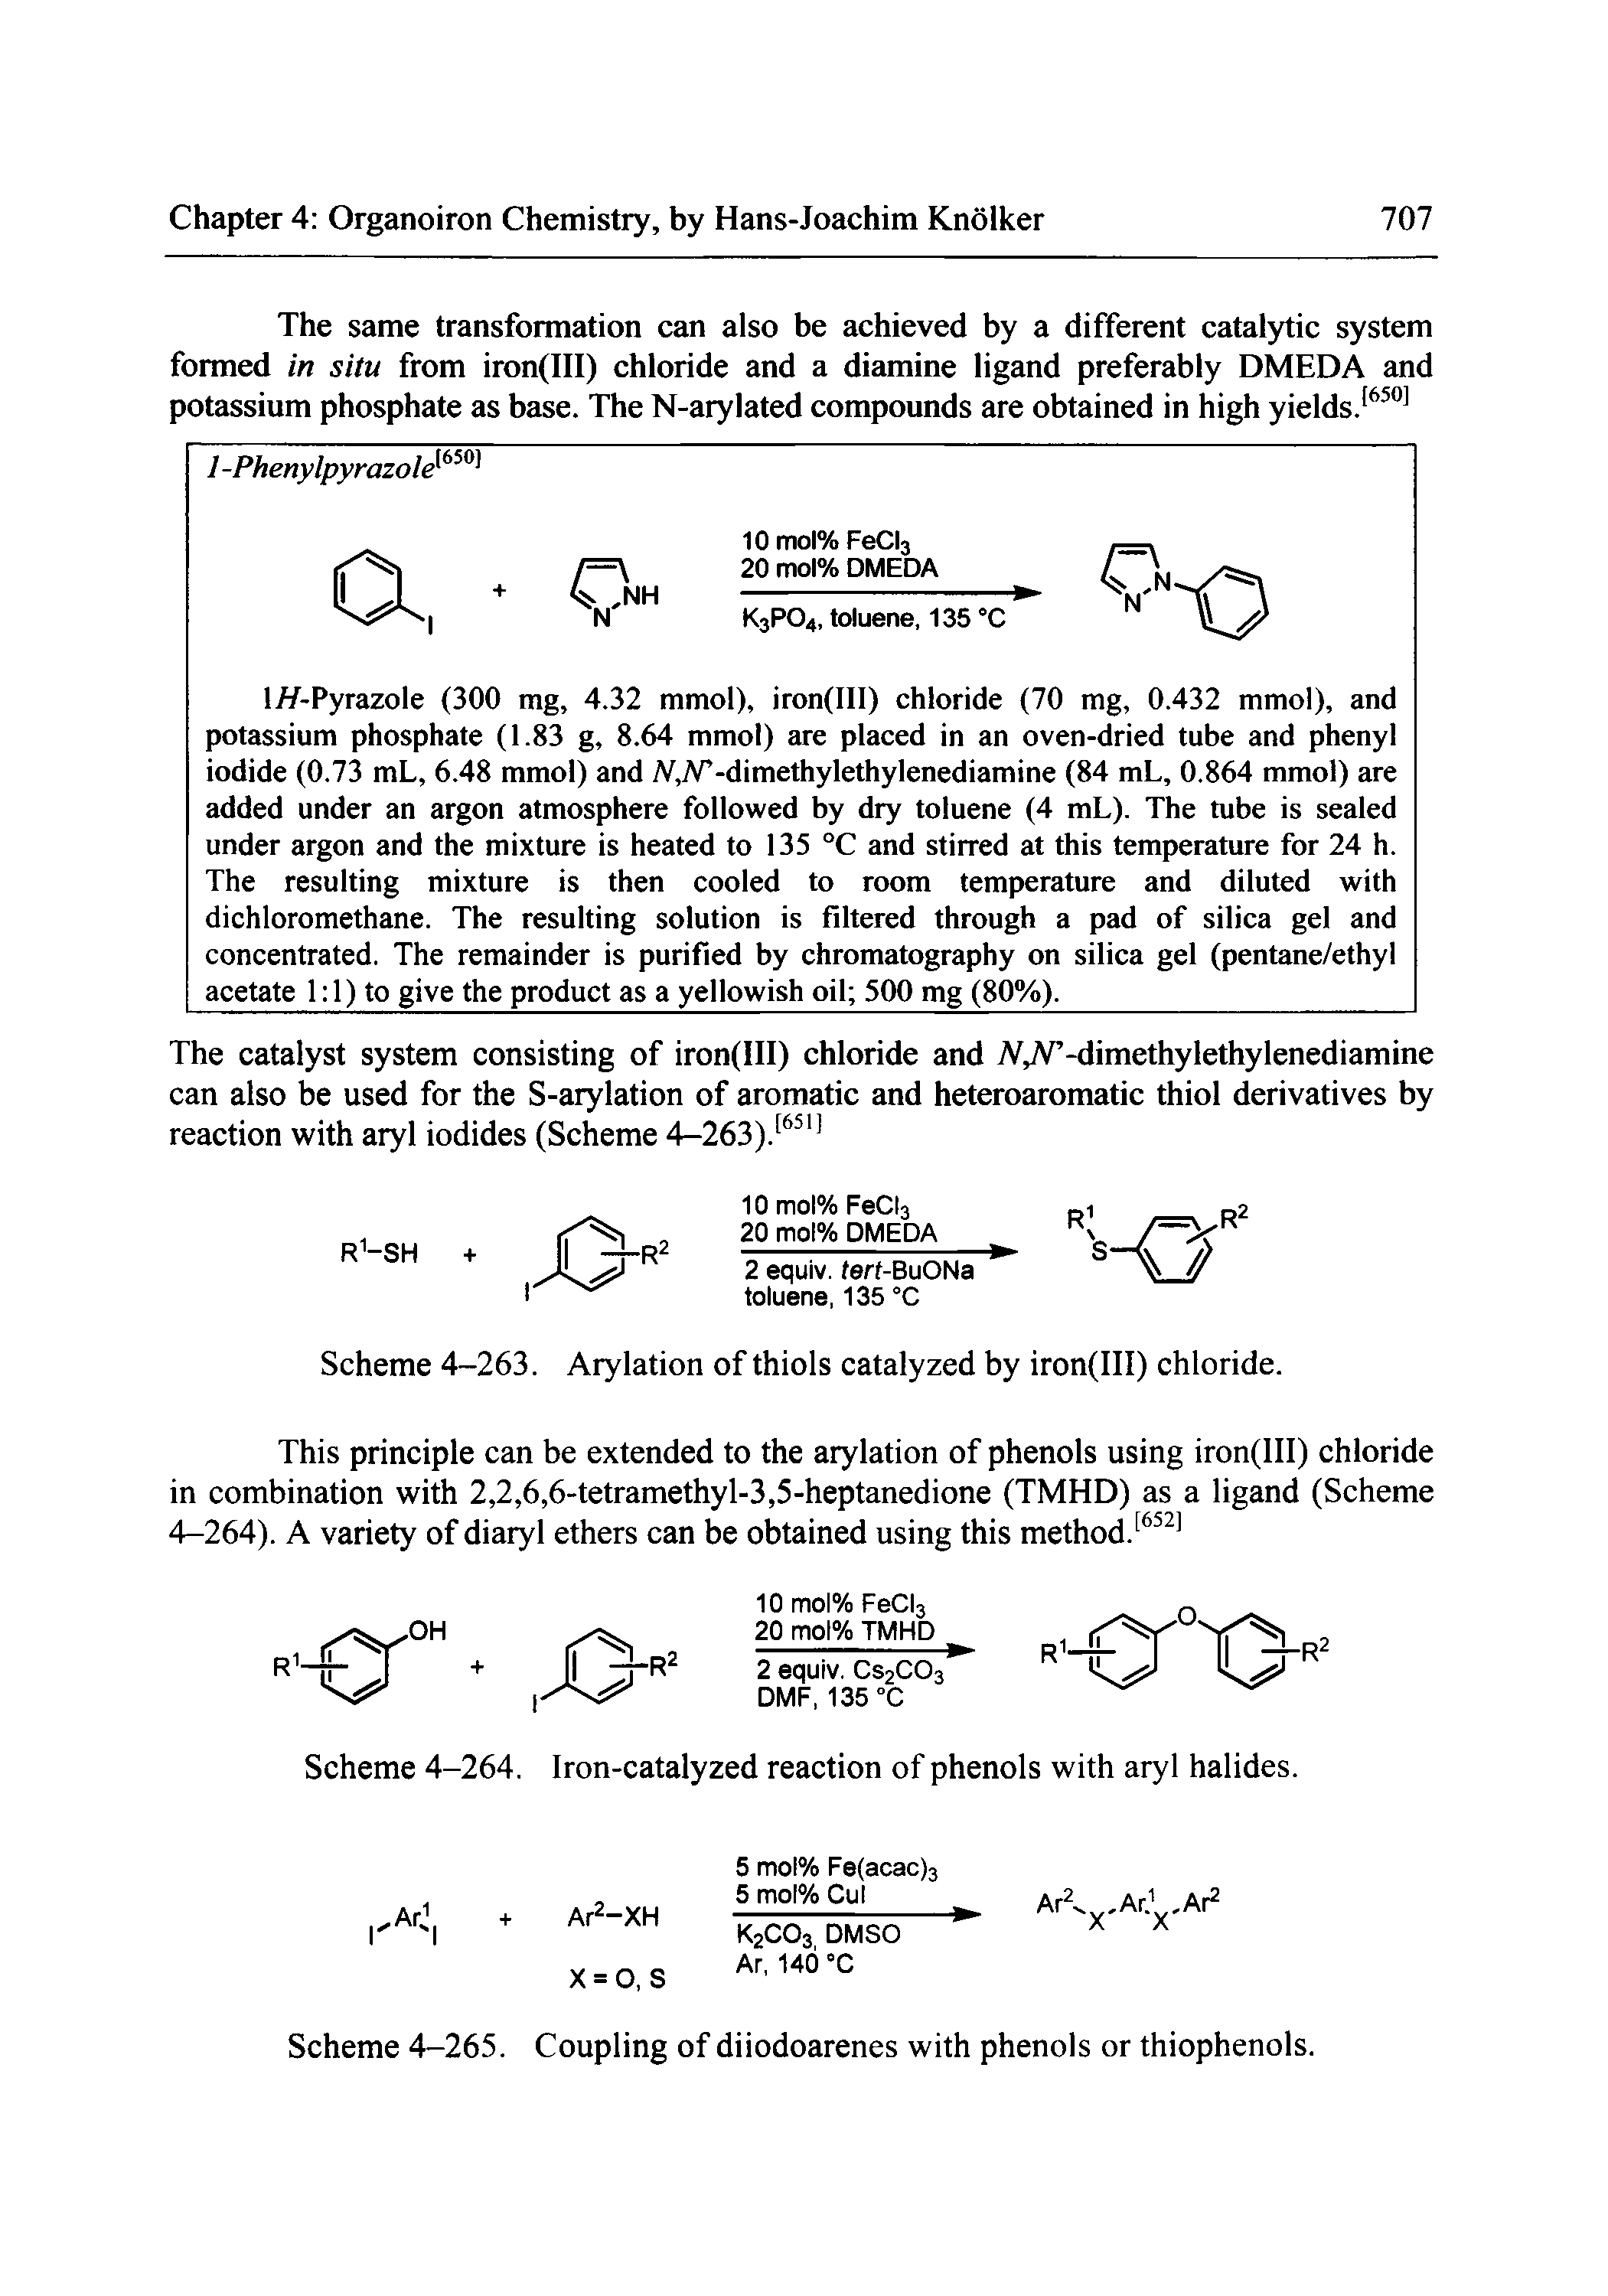 Scheme 4-263. Arylation of thiols catalyzed by iron(III) chloride.